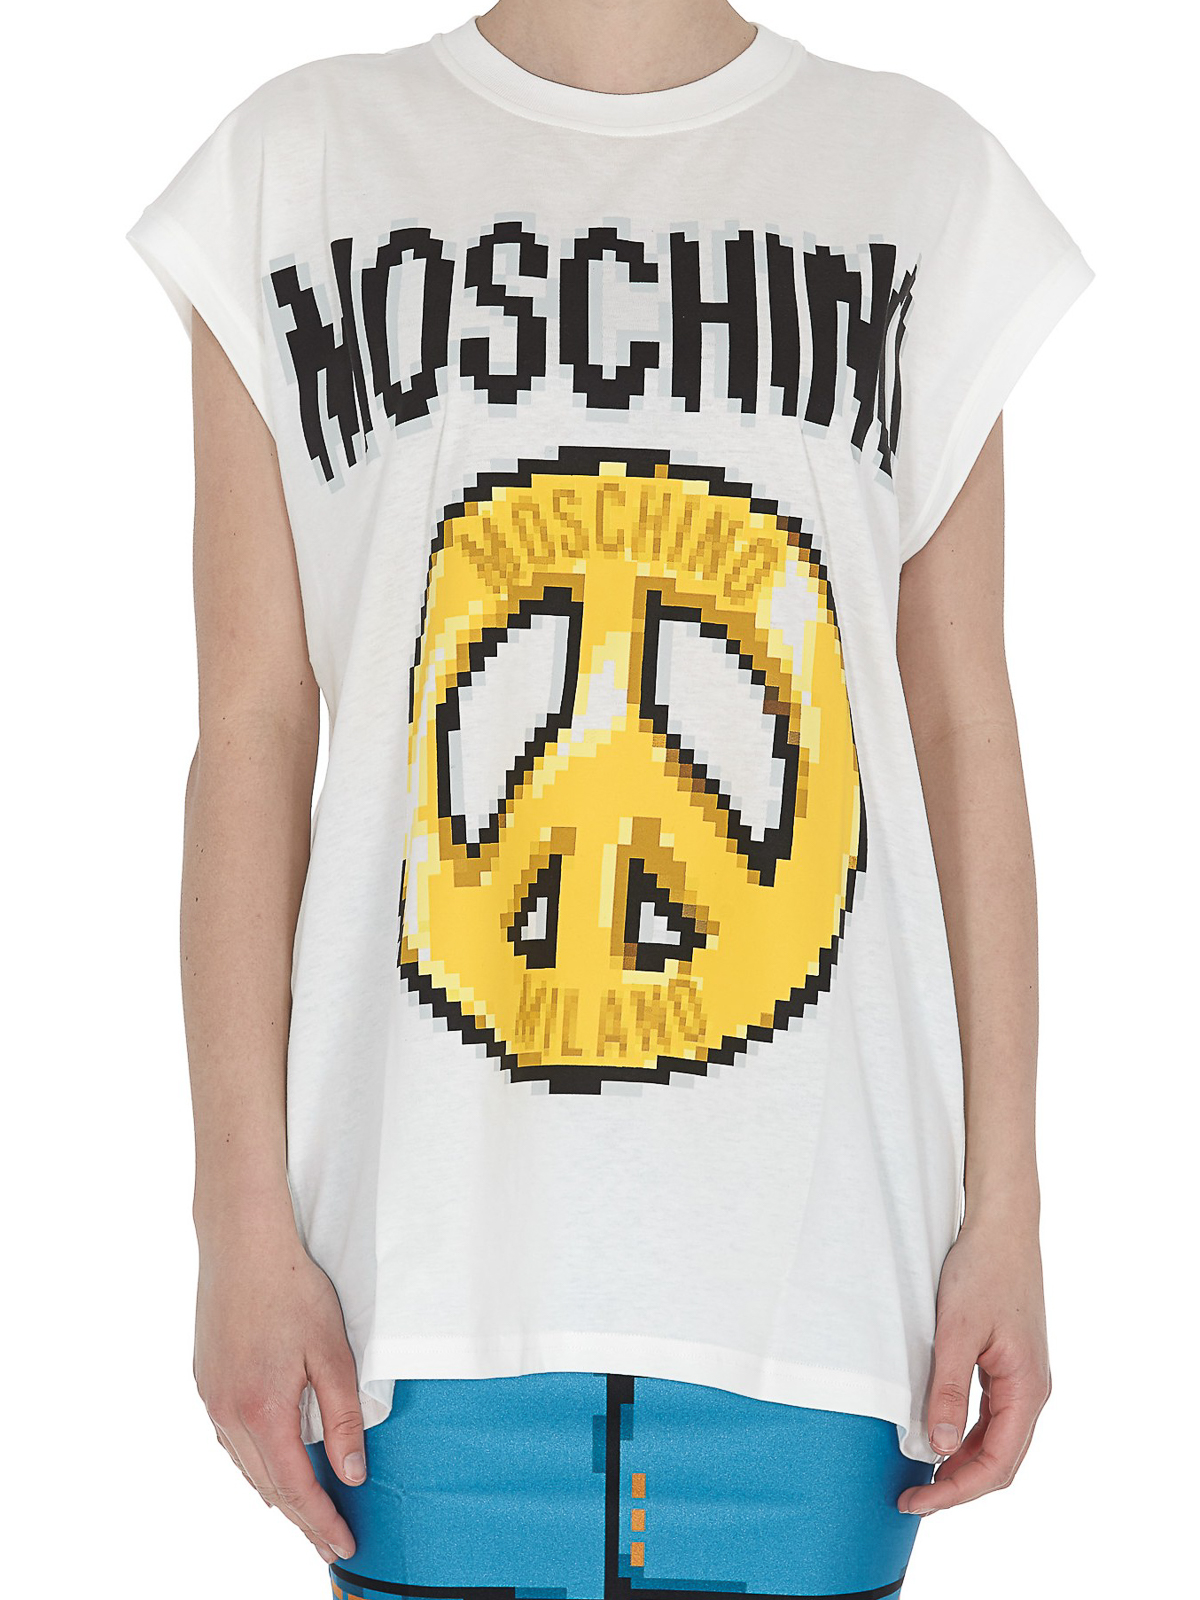 moschino peace t shirt